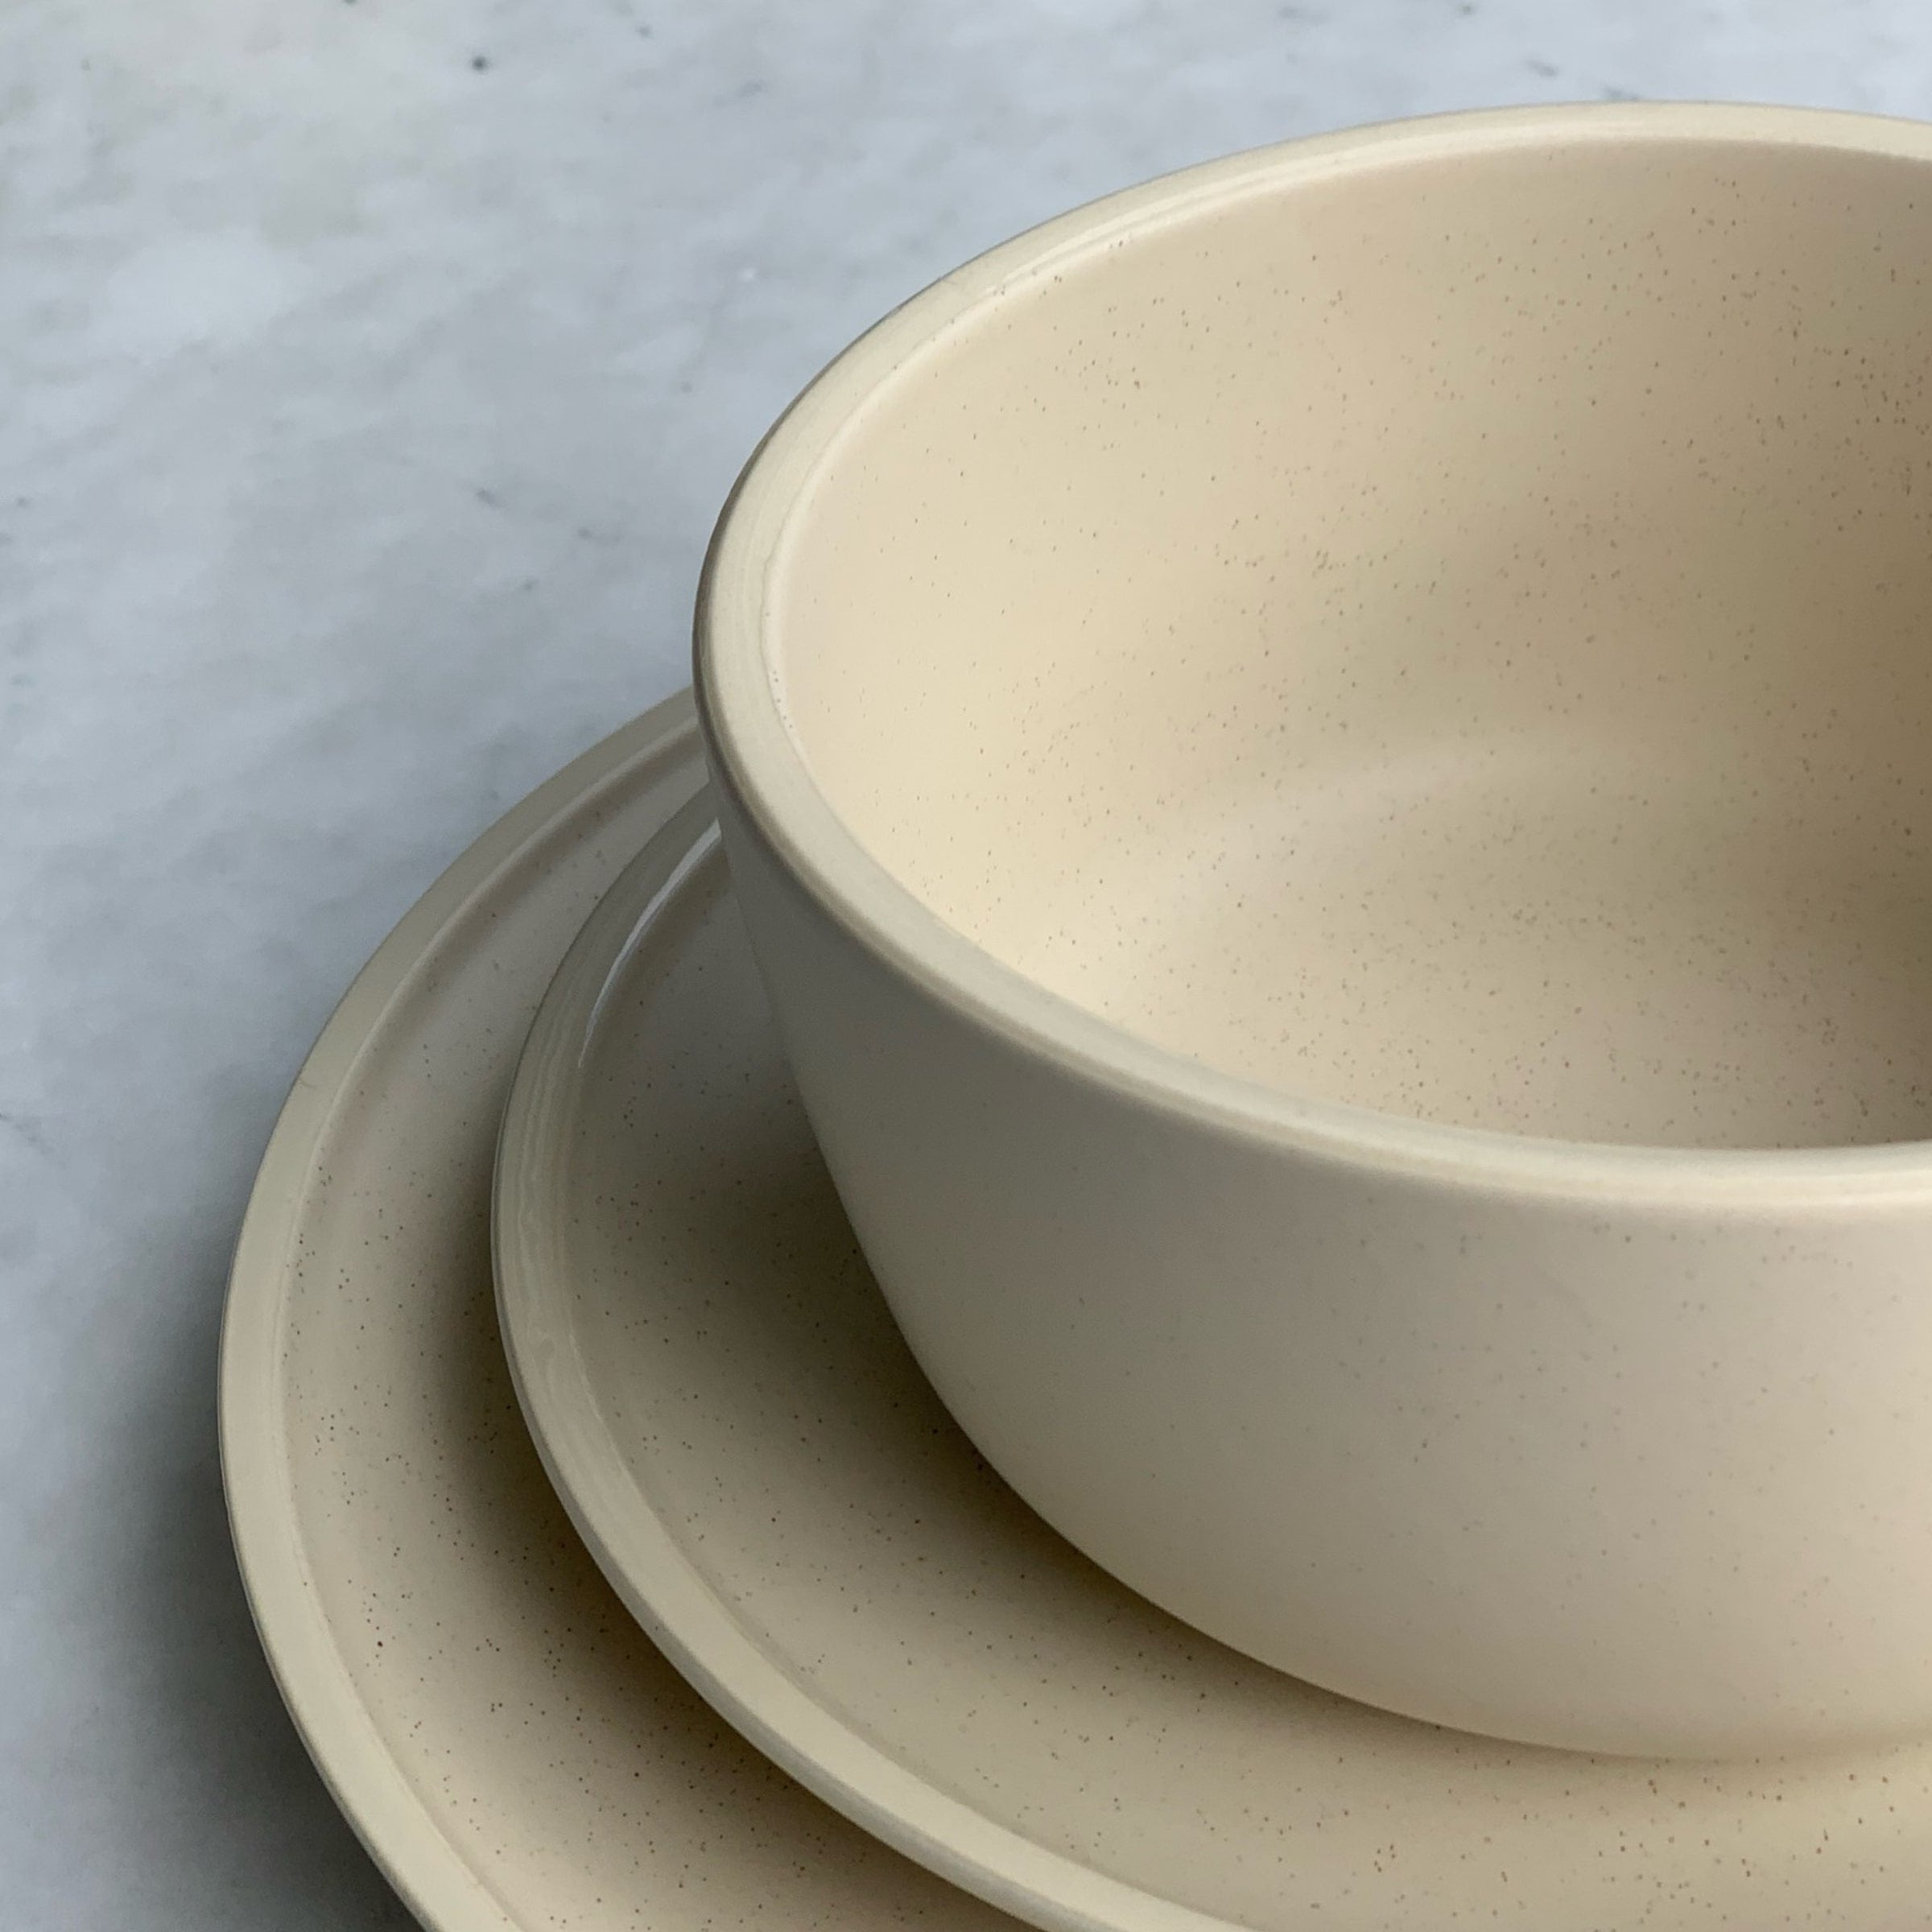 Hall Dinner Bowl - White - Buy Bowls Online at FRANKY'S